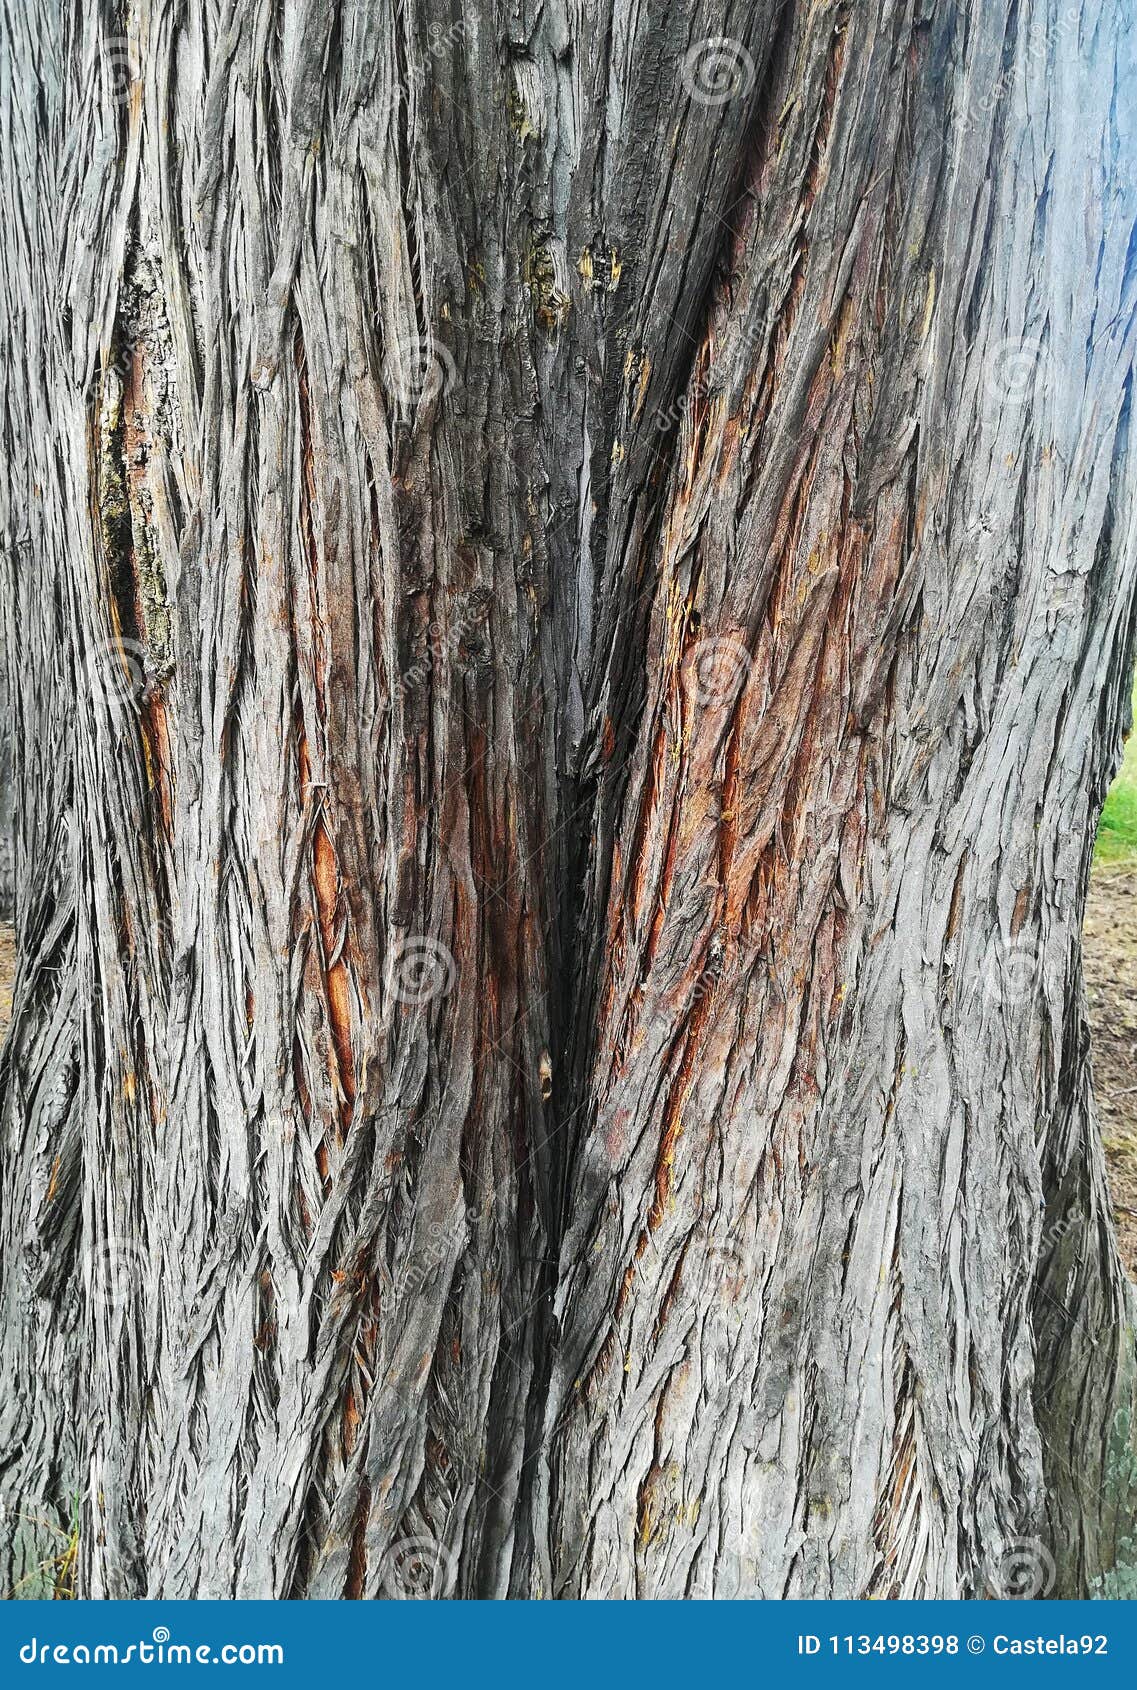 tree trunk texture wood